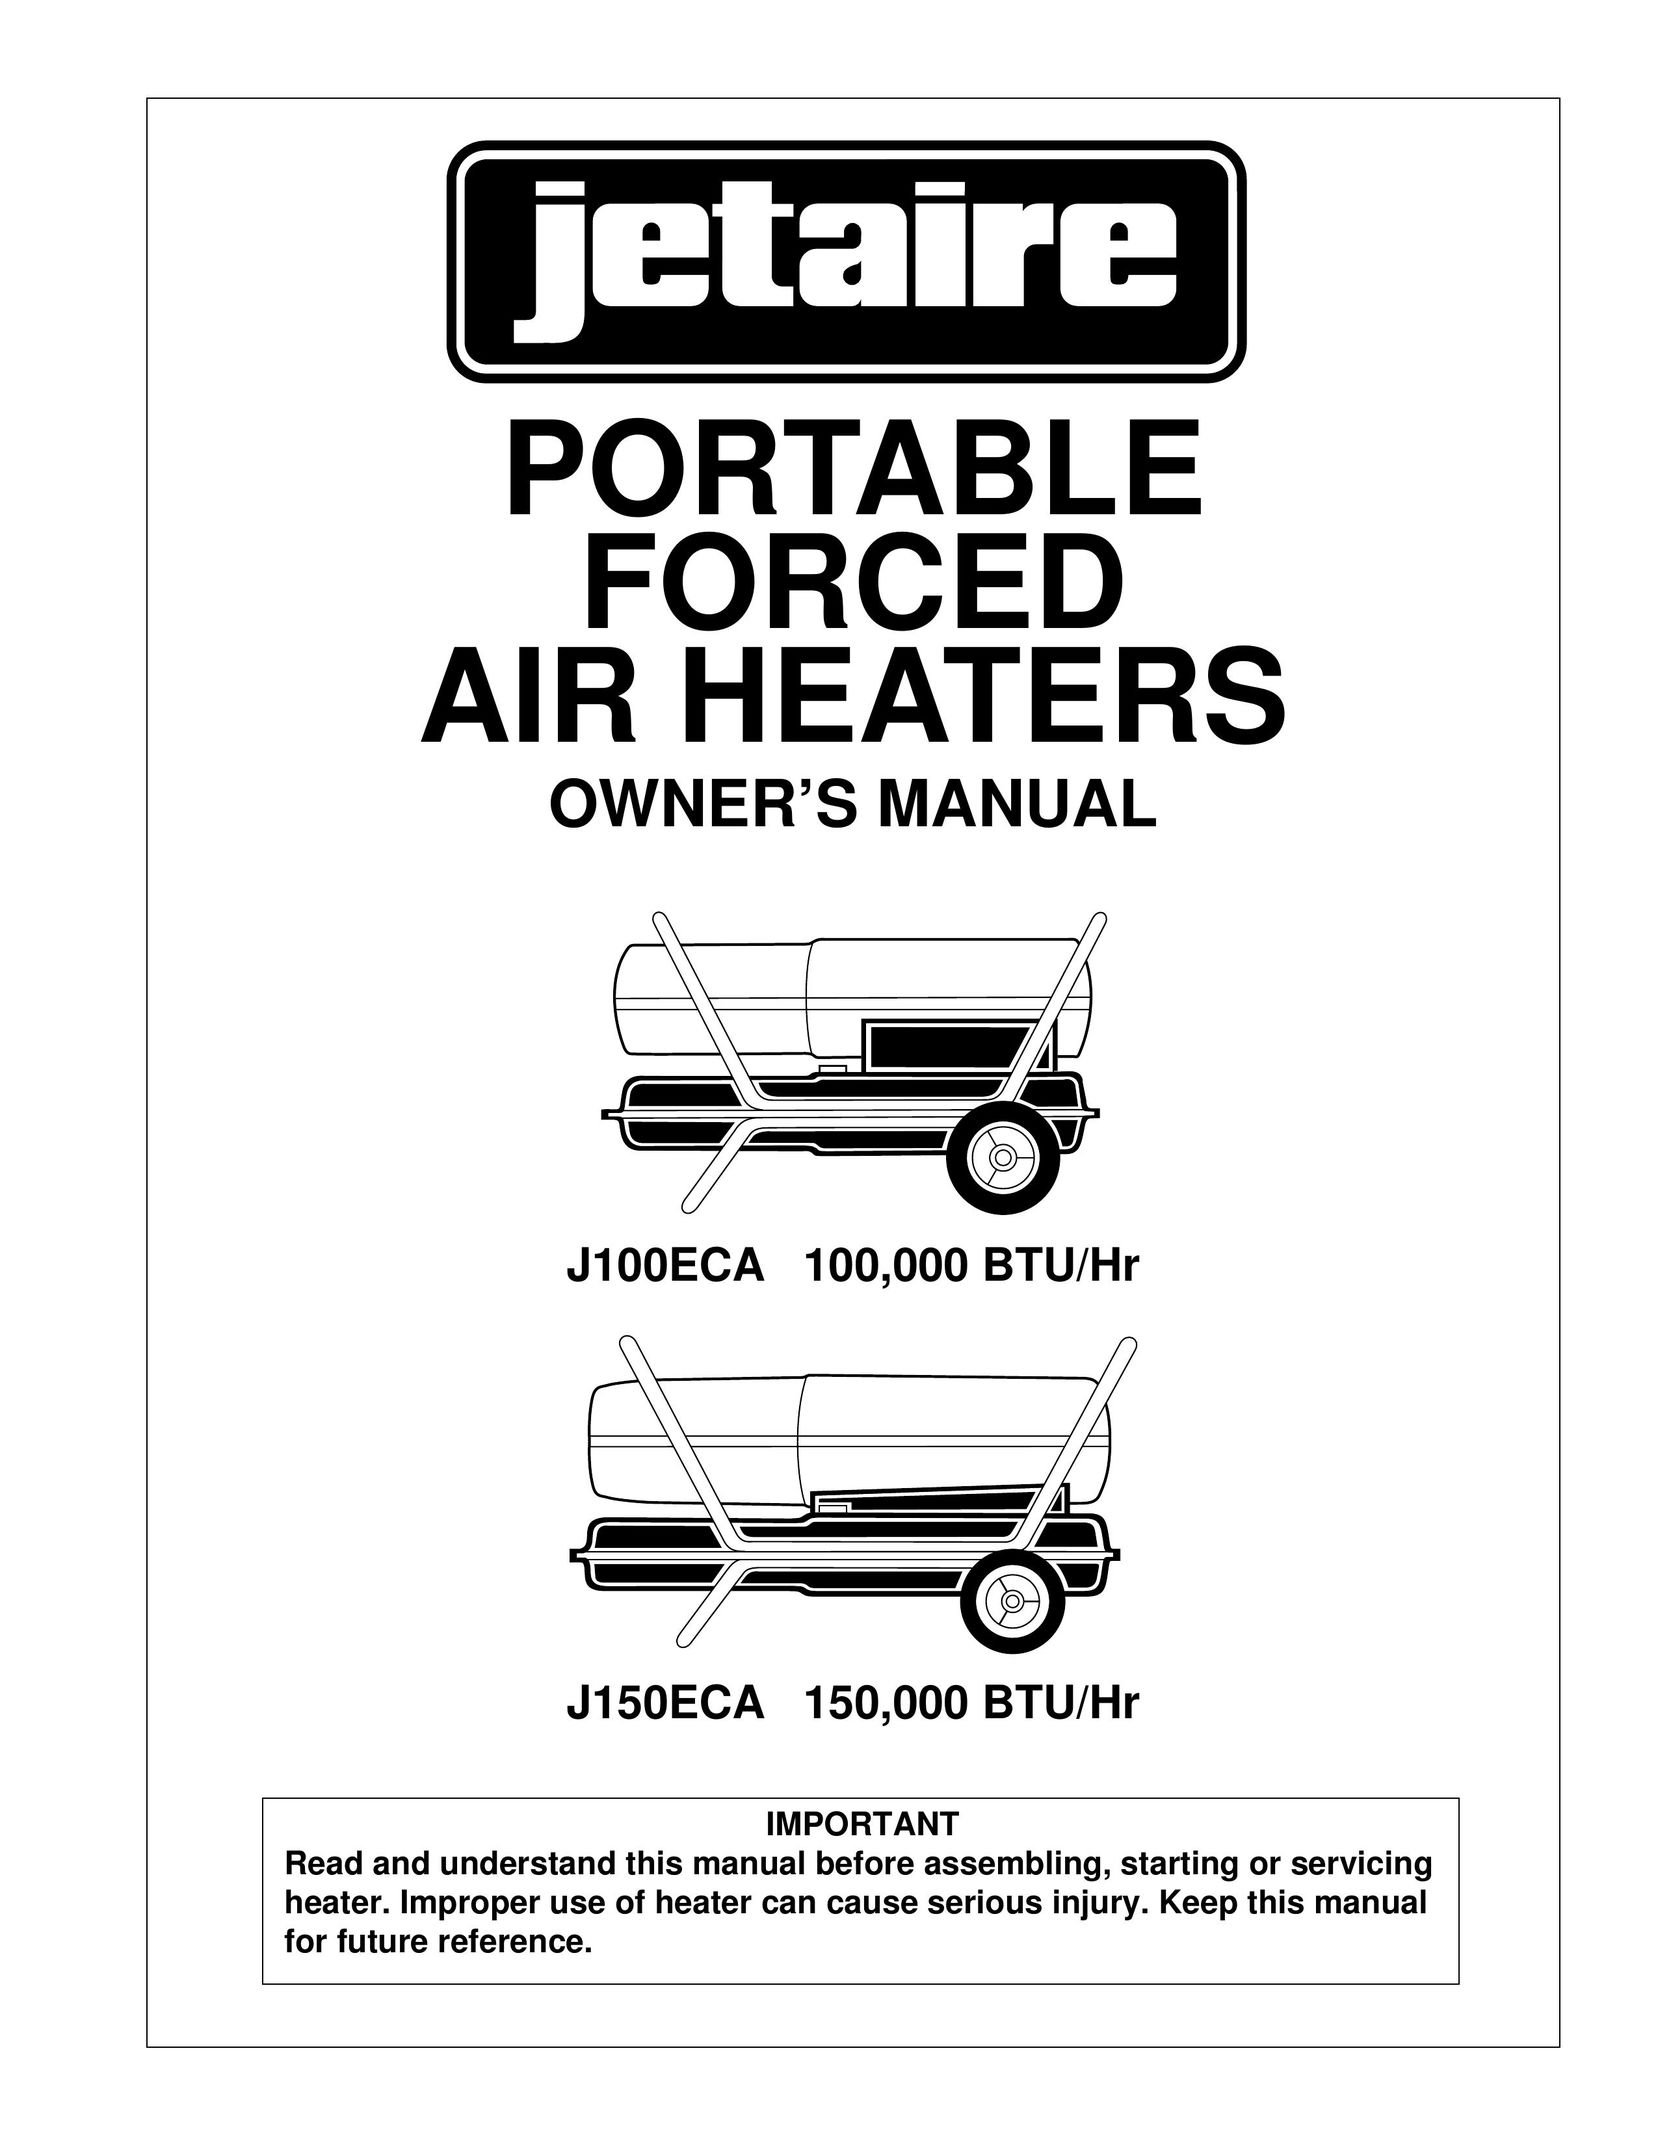 Jet Tools J150ECA Electric Heater User Manual